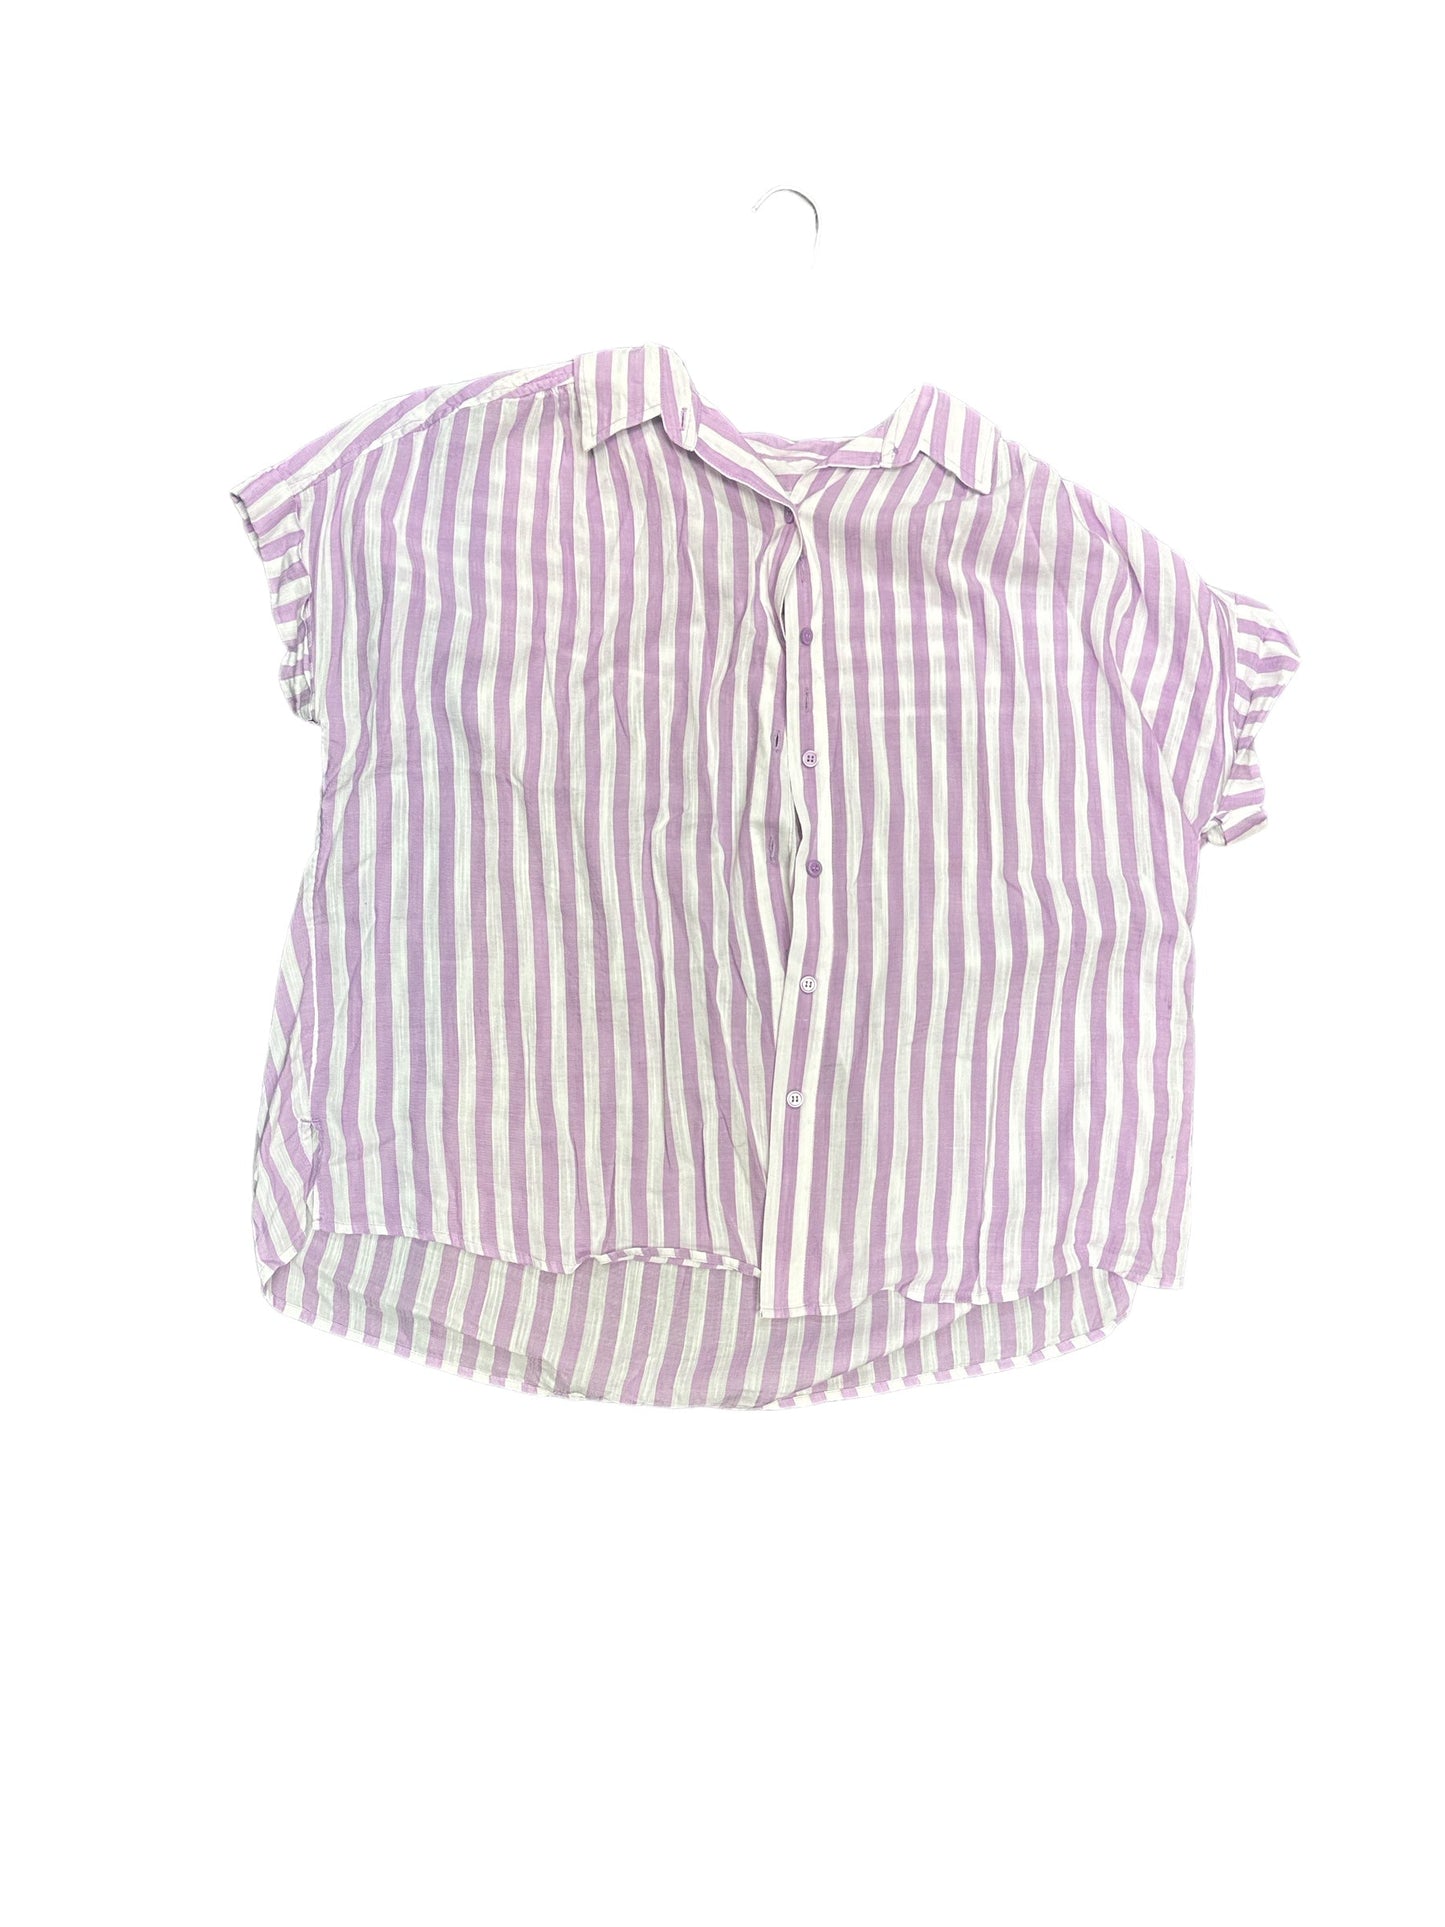 Purple & White Blouse Short Sleeve Lane Bryant, Size 1x